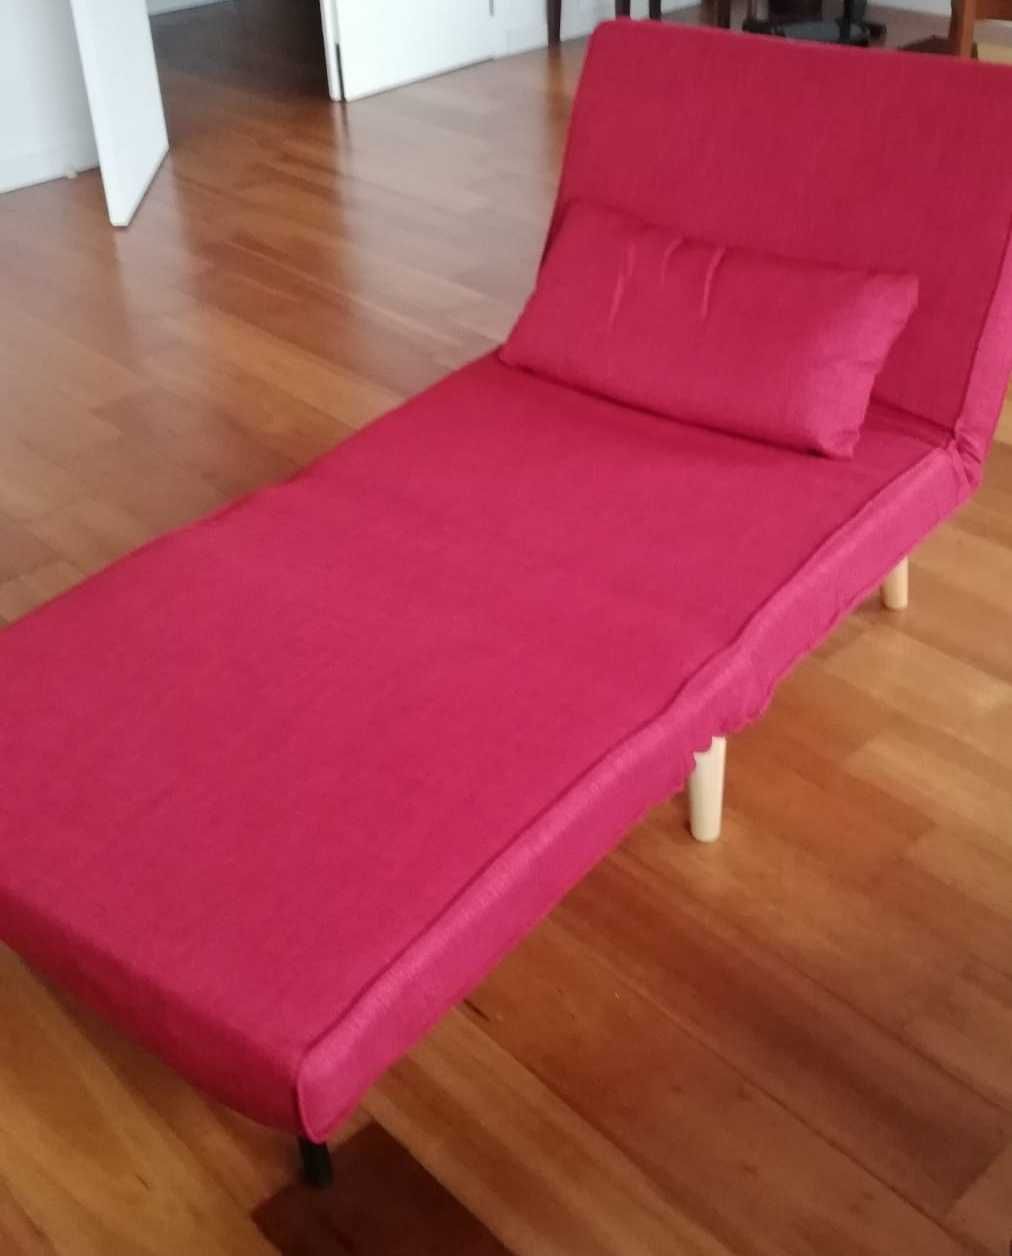 Poltrona/chaise longue/cama